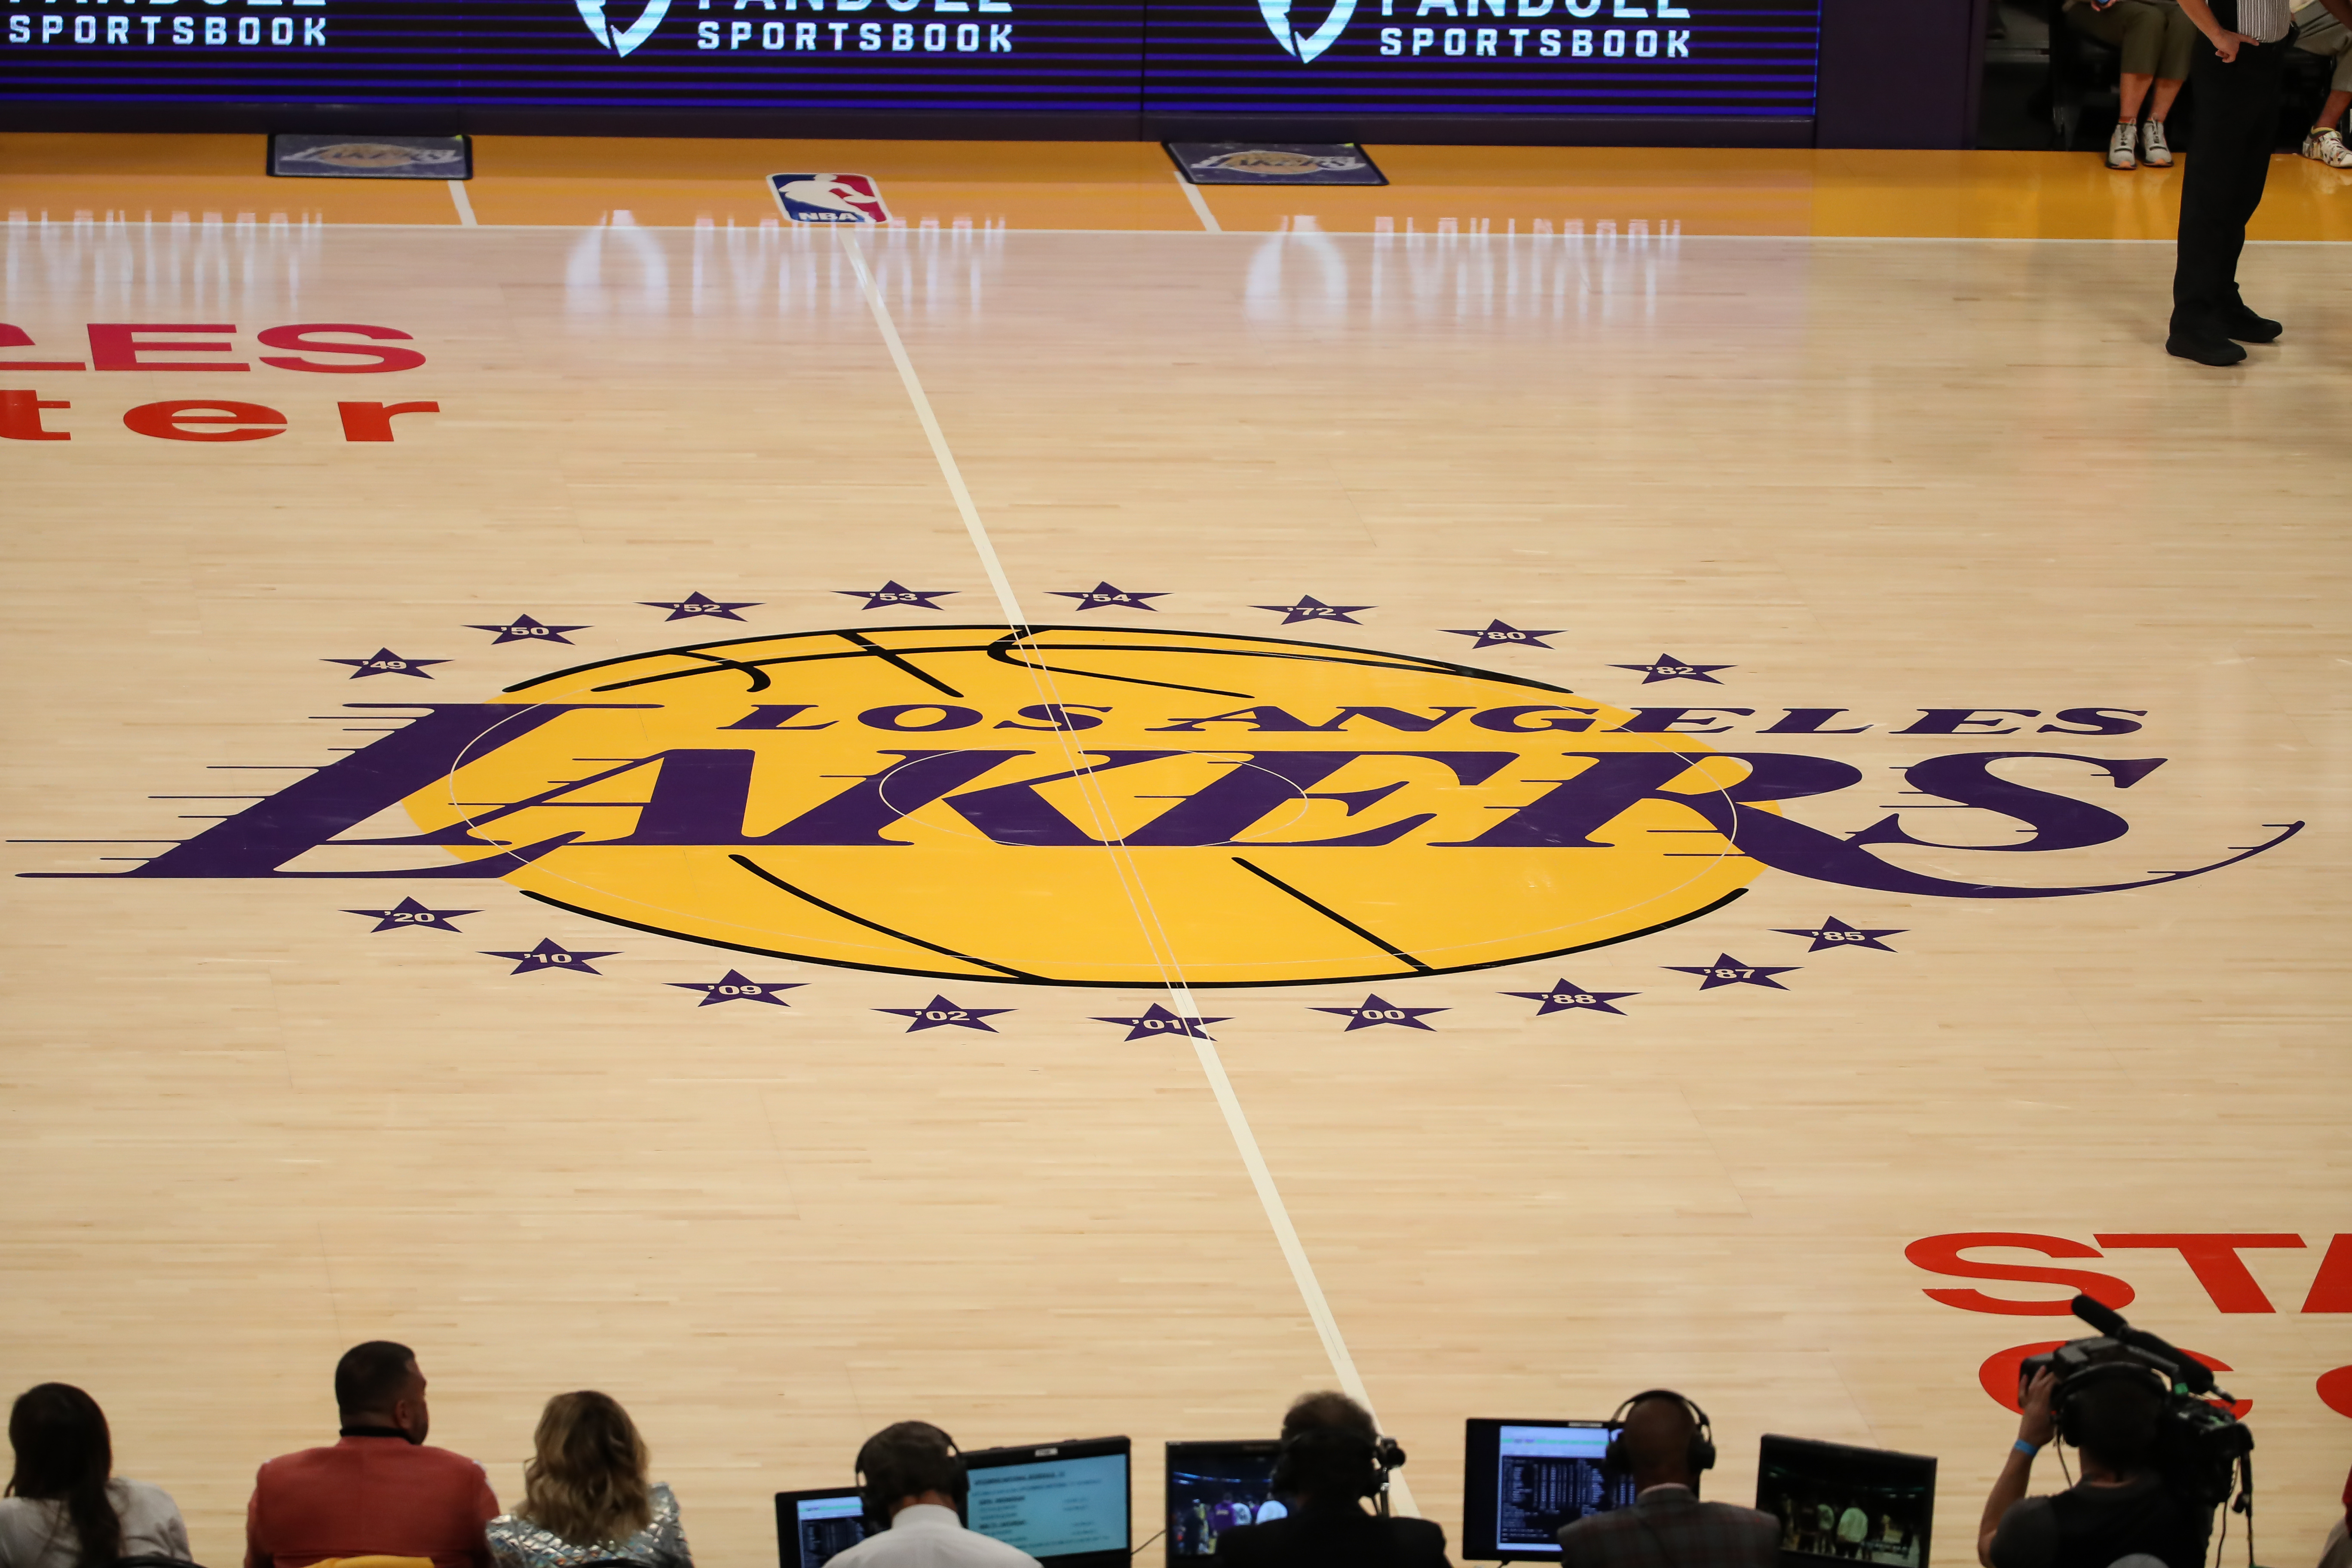 NBA Trade Rumors: Lakers Eyeing Aggressive Trade During 2022 Draft